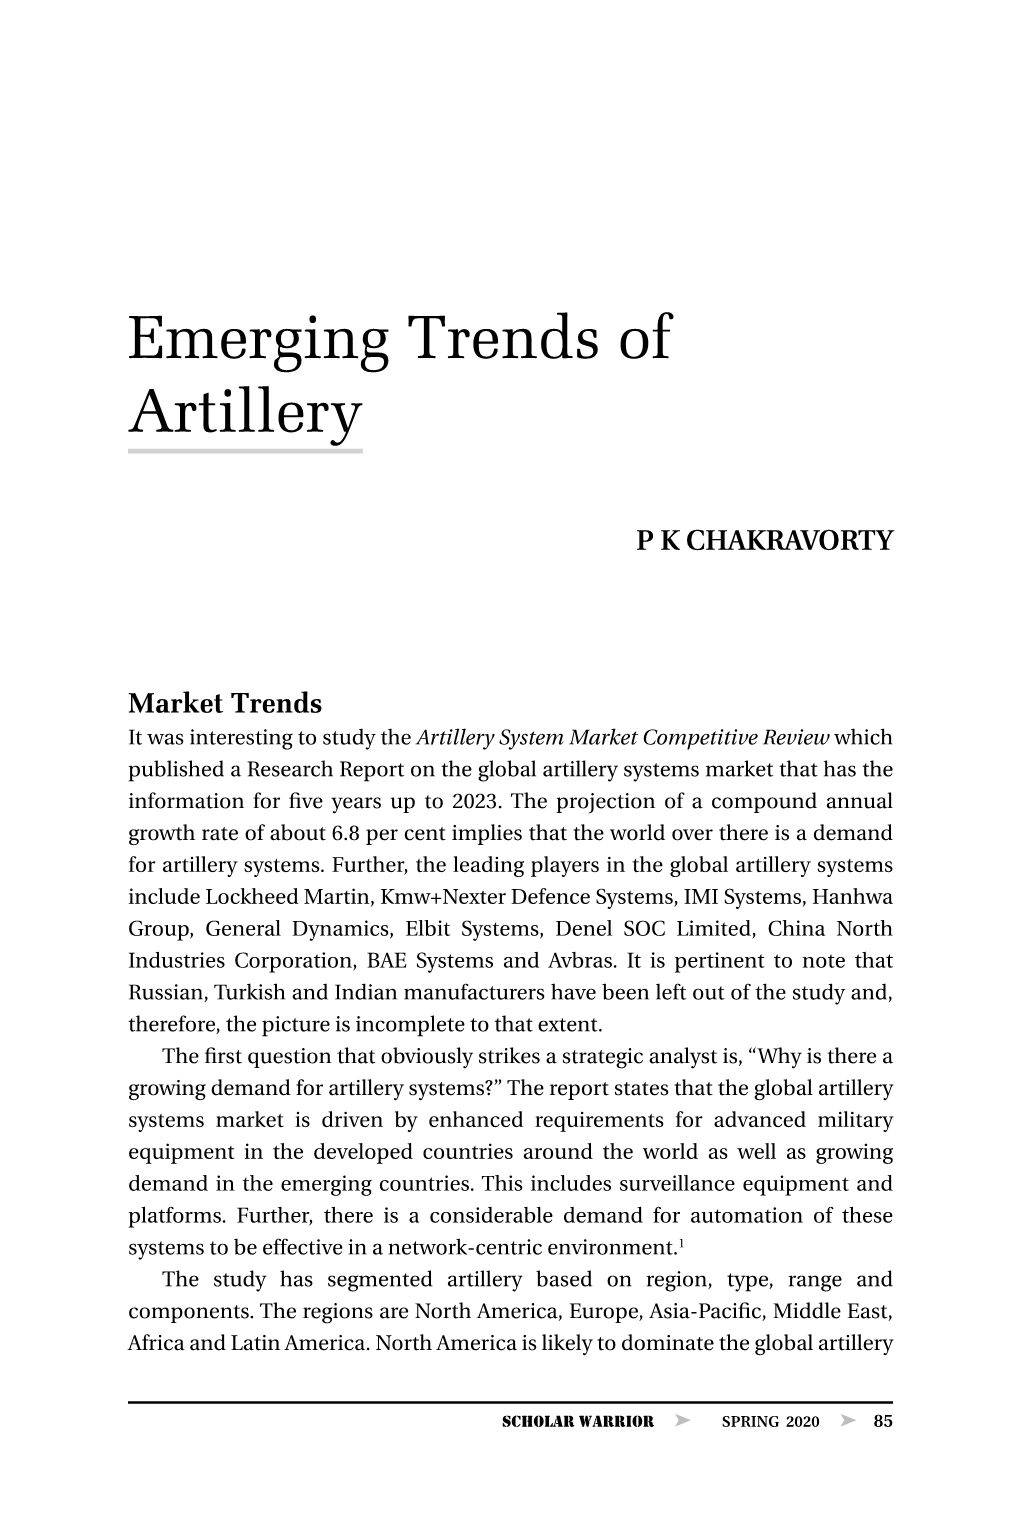 Emerging Trends of Artillery